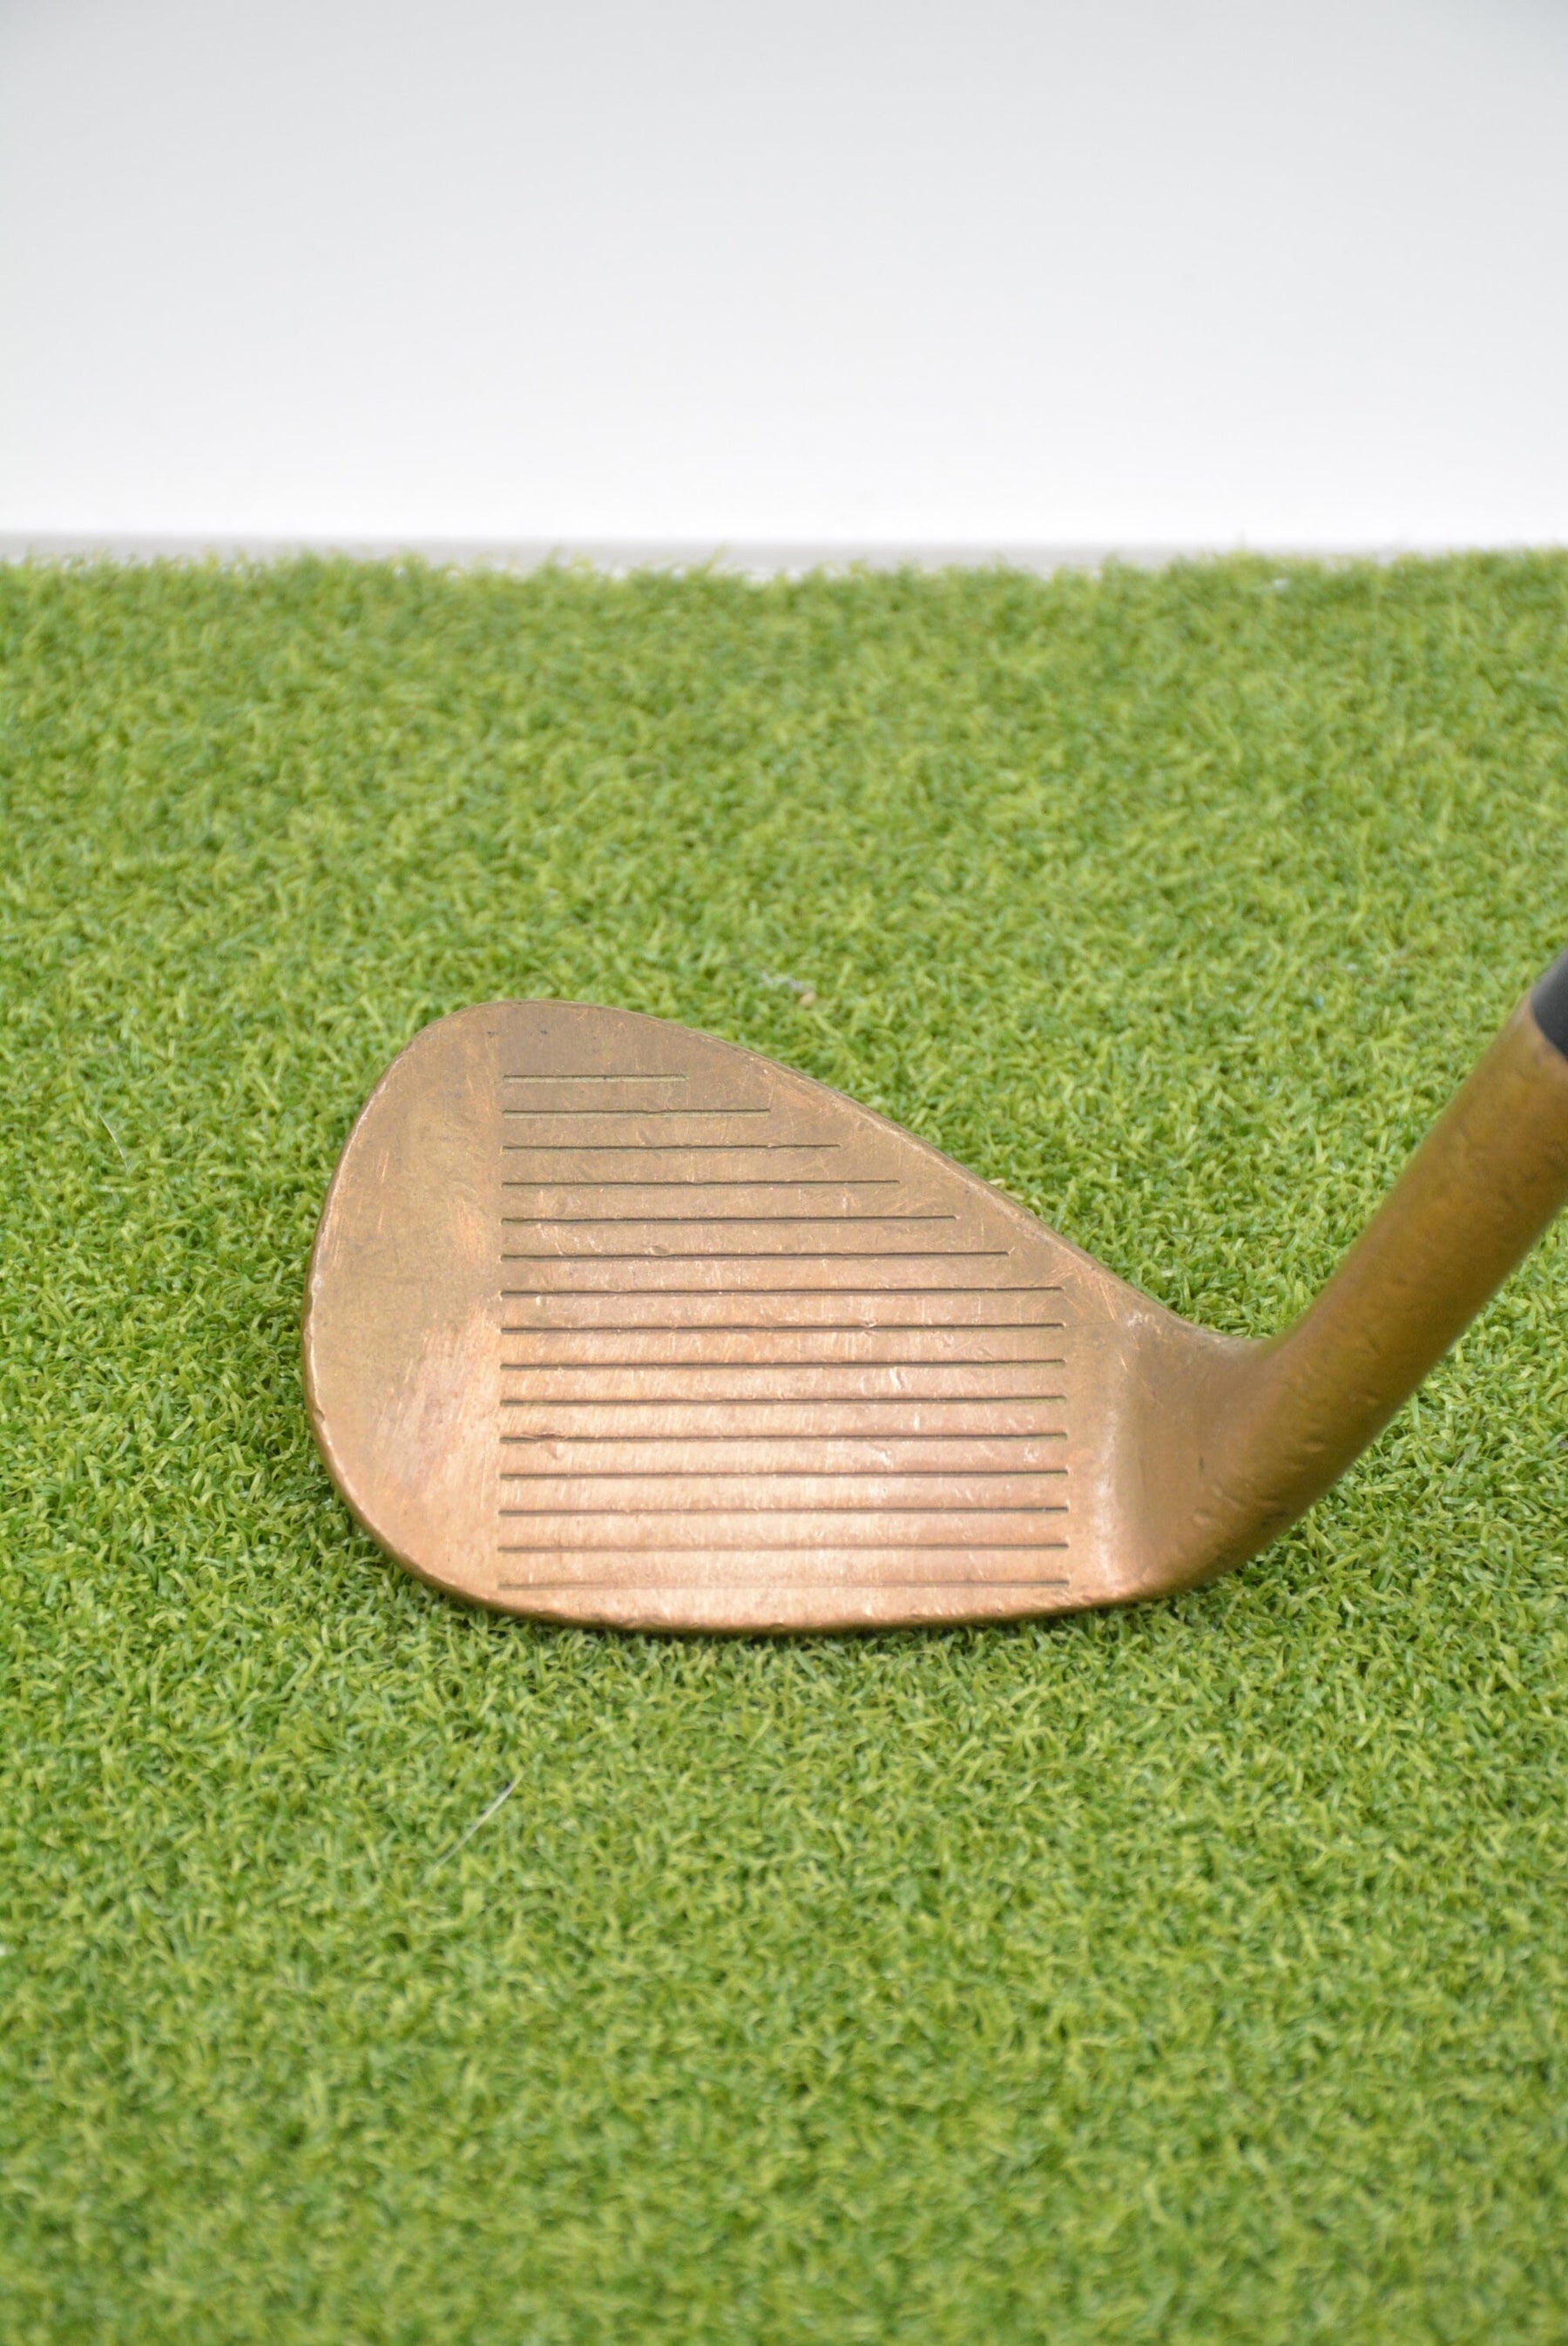 Cleveland 588 Beryllium Copper 60 Degree Wedge Wedge Flex Golf Clubs GolfRoots 